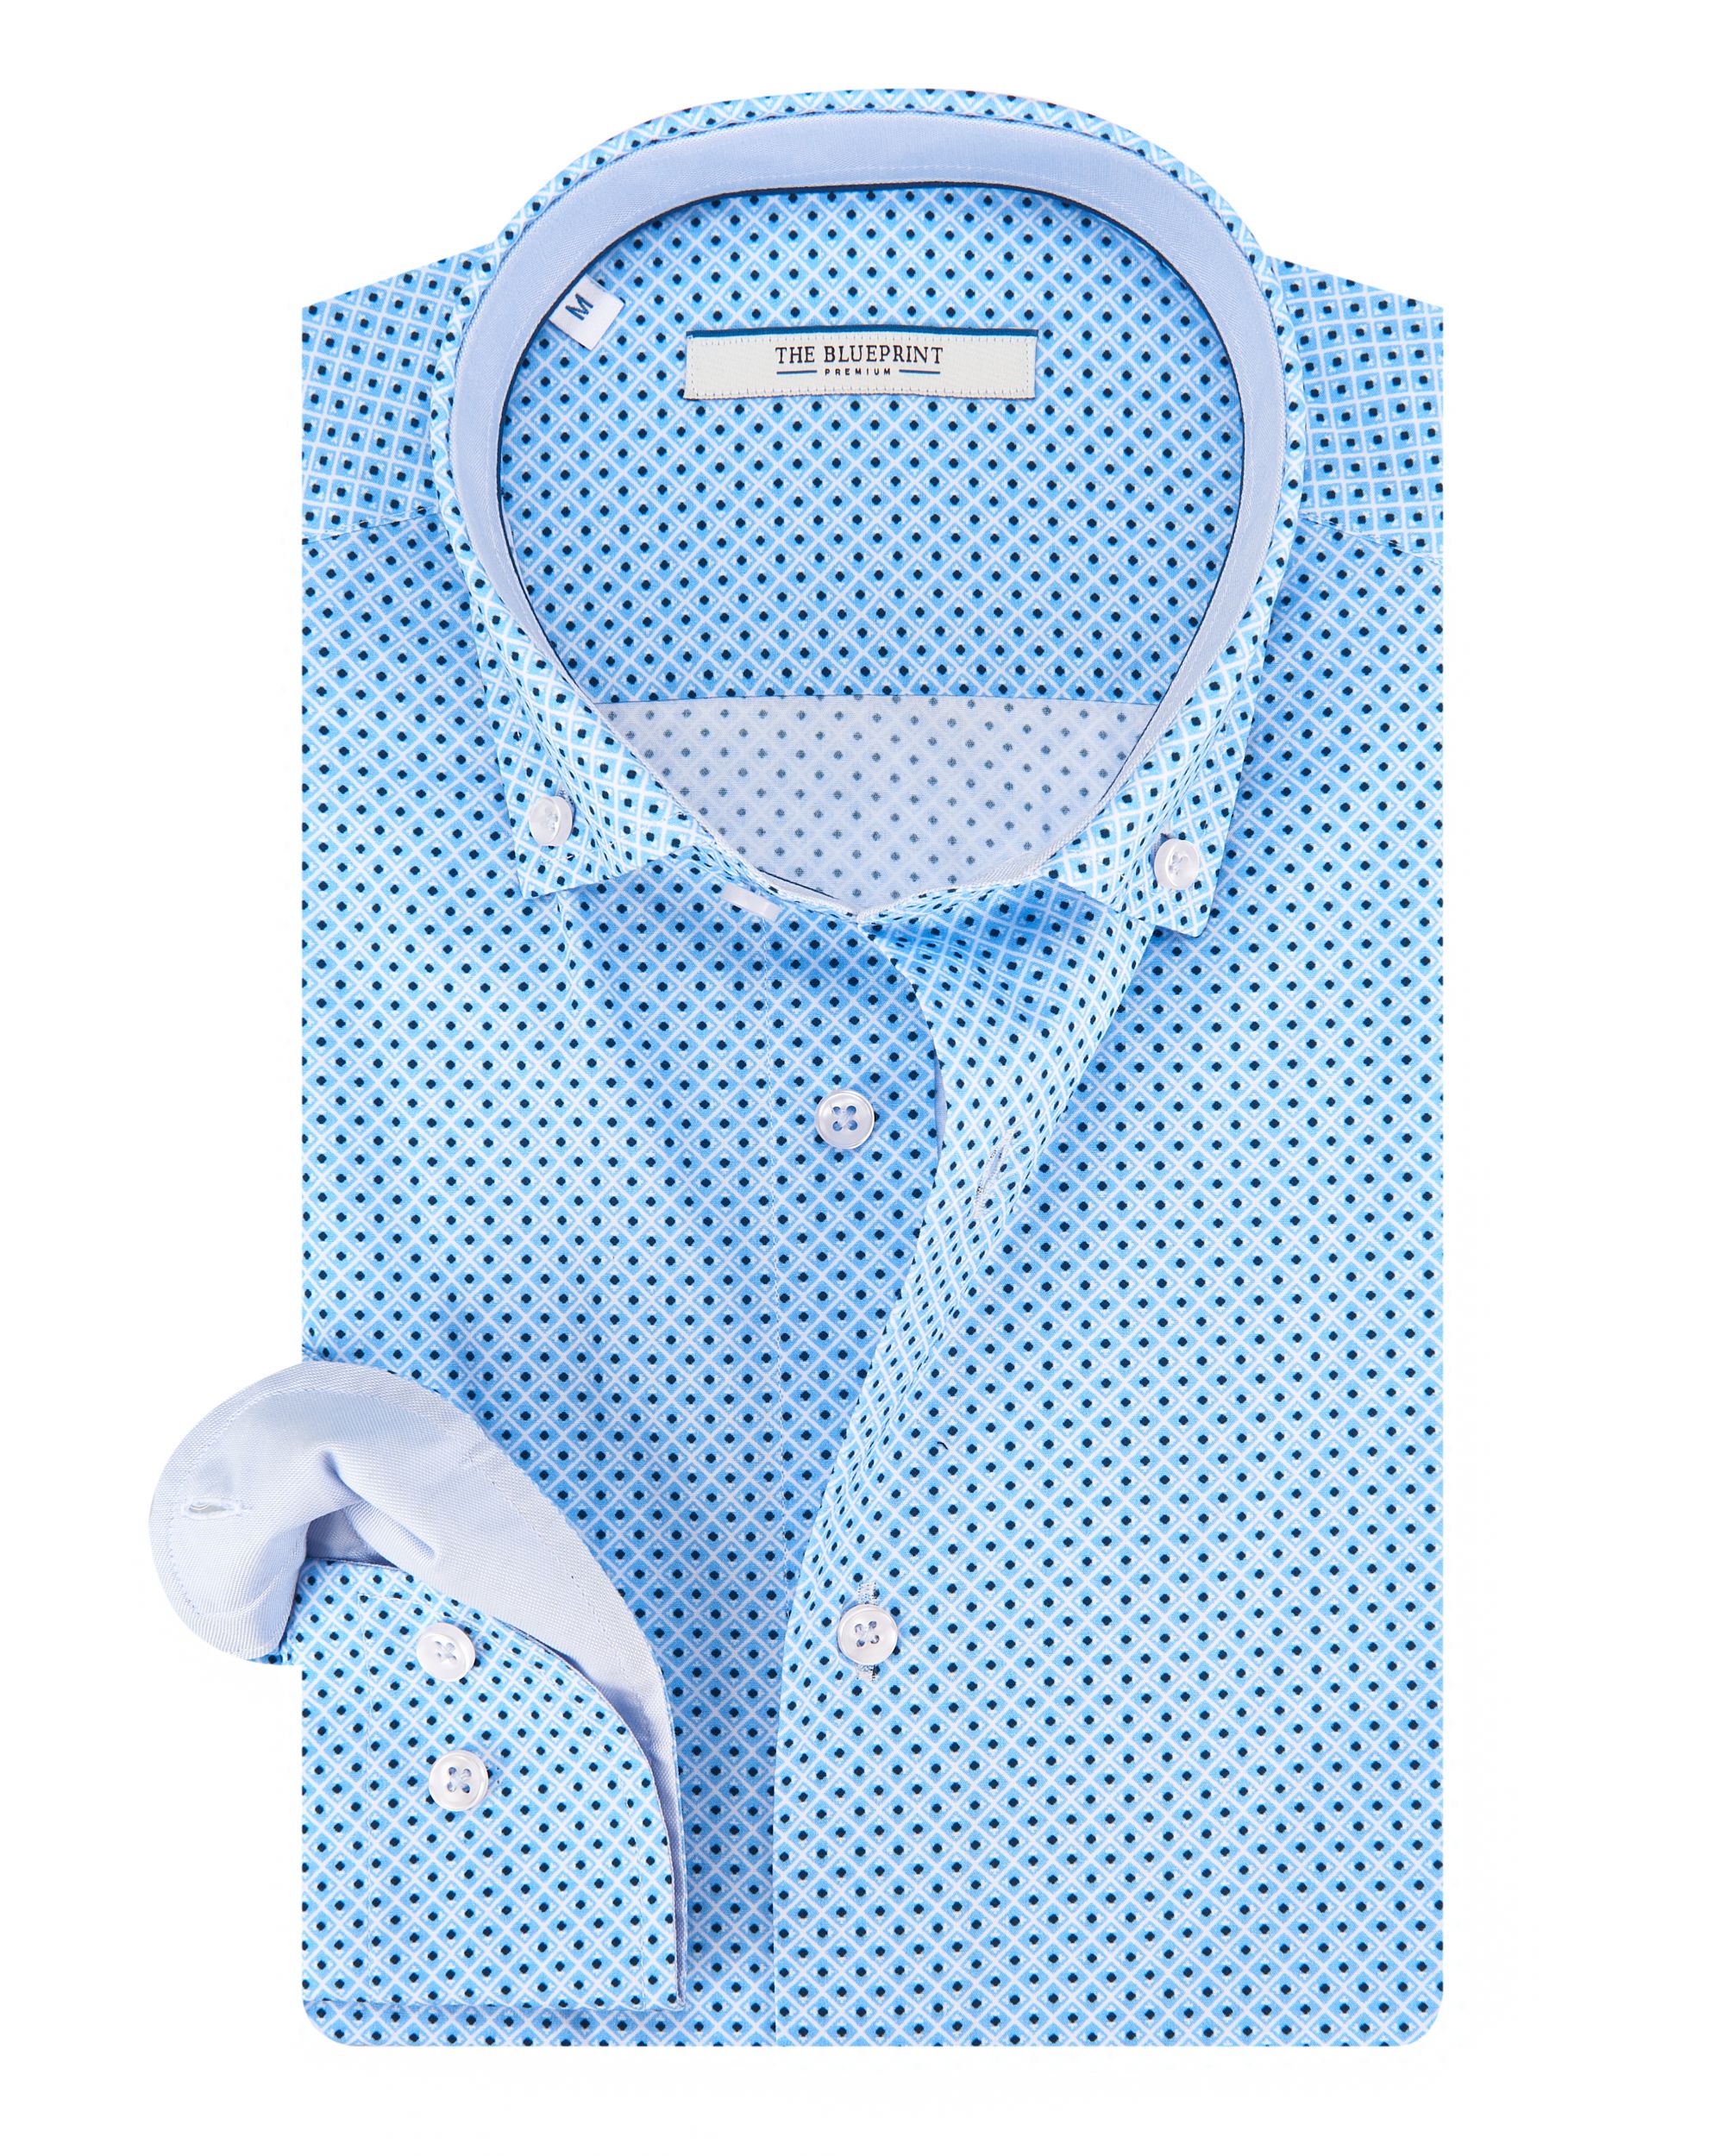 The BLUEPRINT Premium Trendy overhemd LM Blauw dessin 084494-001-L